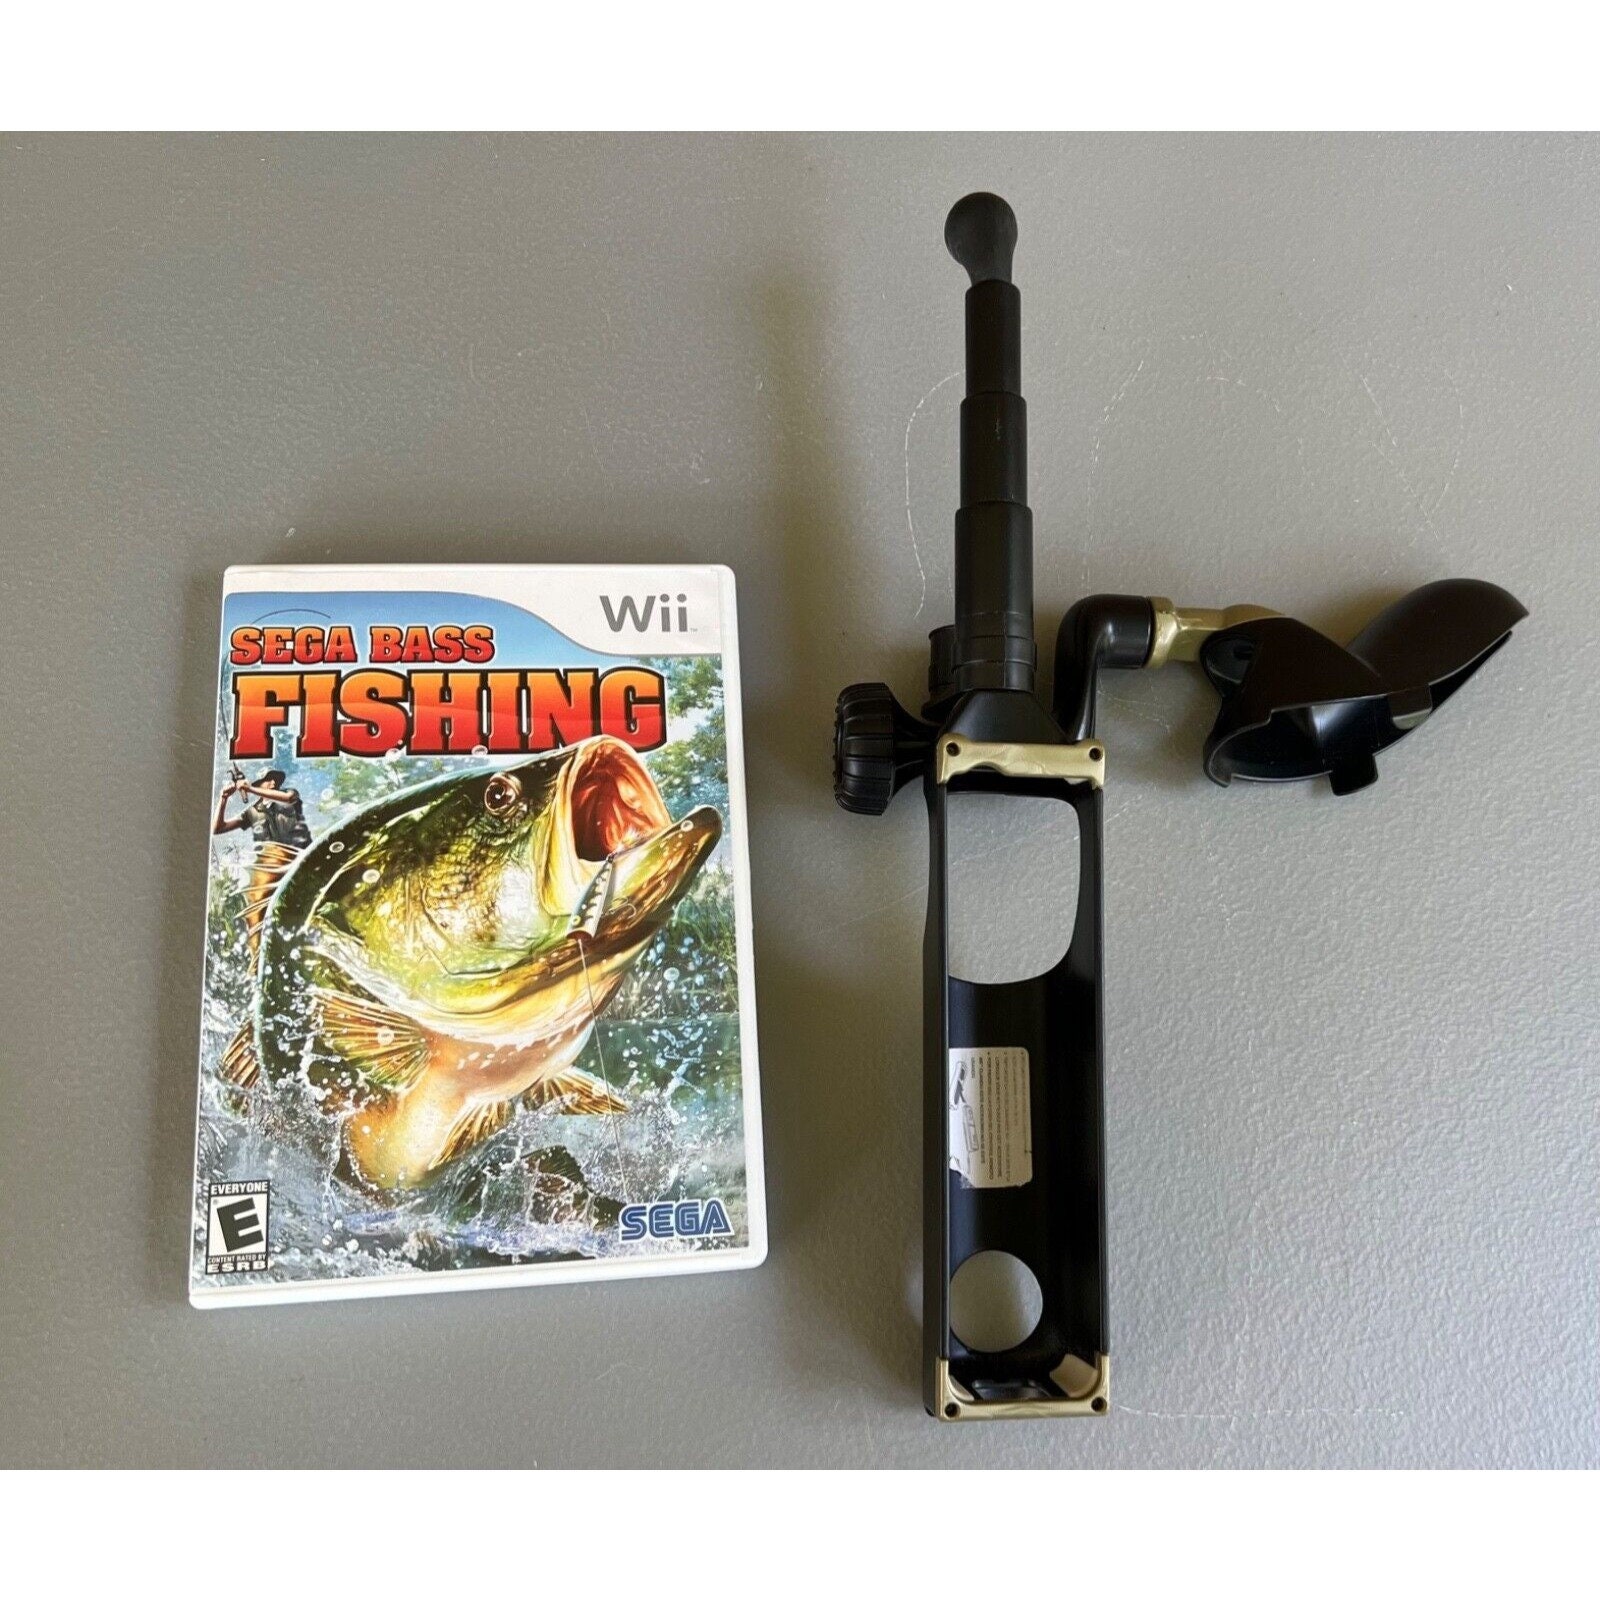 Nintendo Wii Sega Bass Fishing Game With Fishing Rod Controller